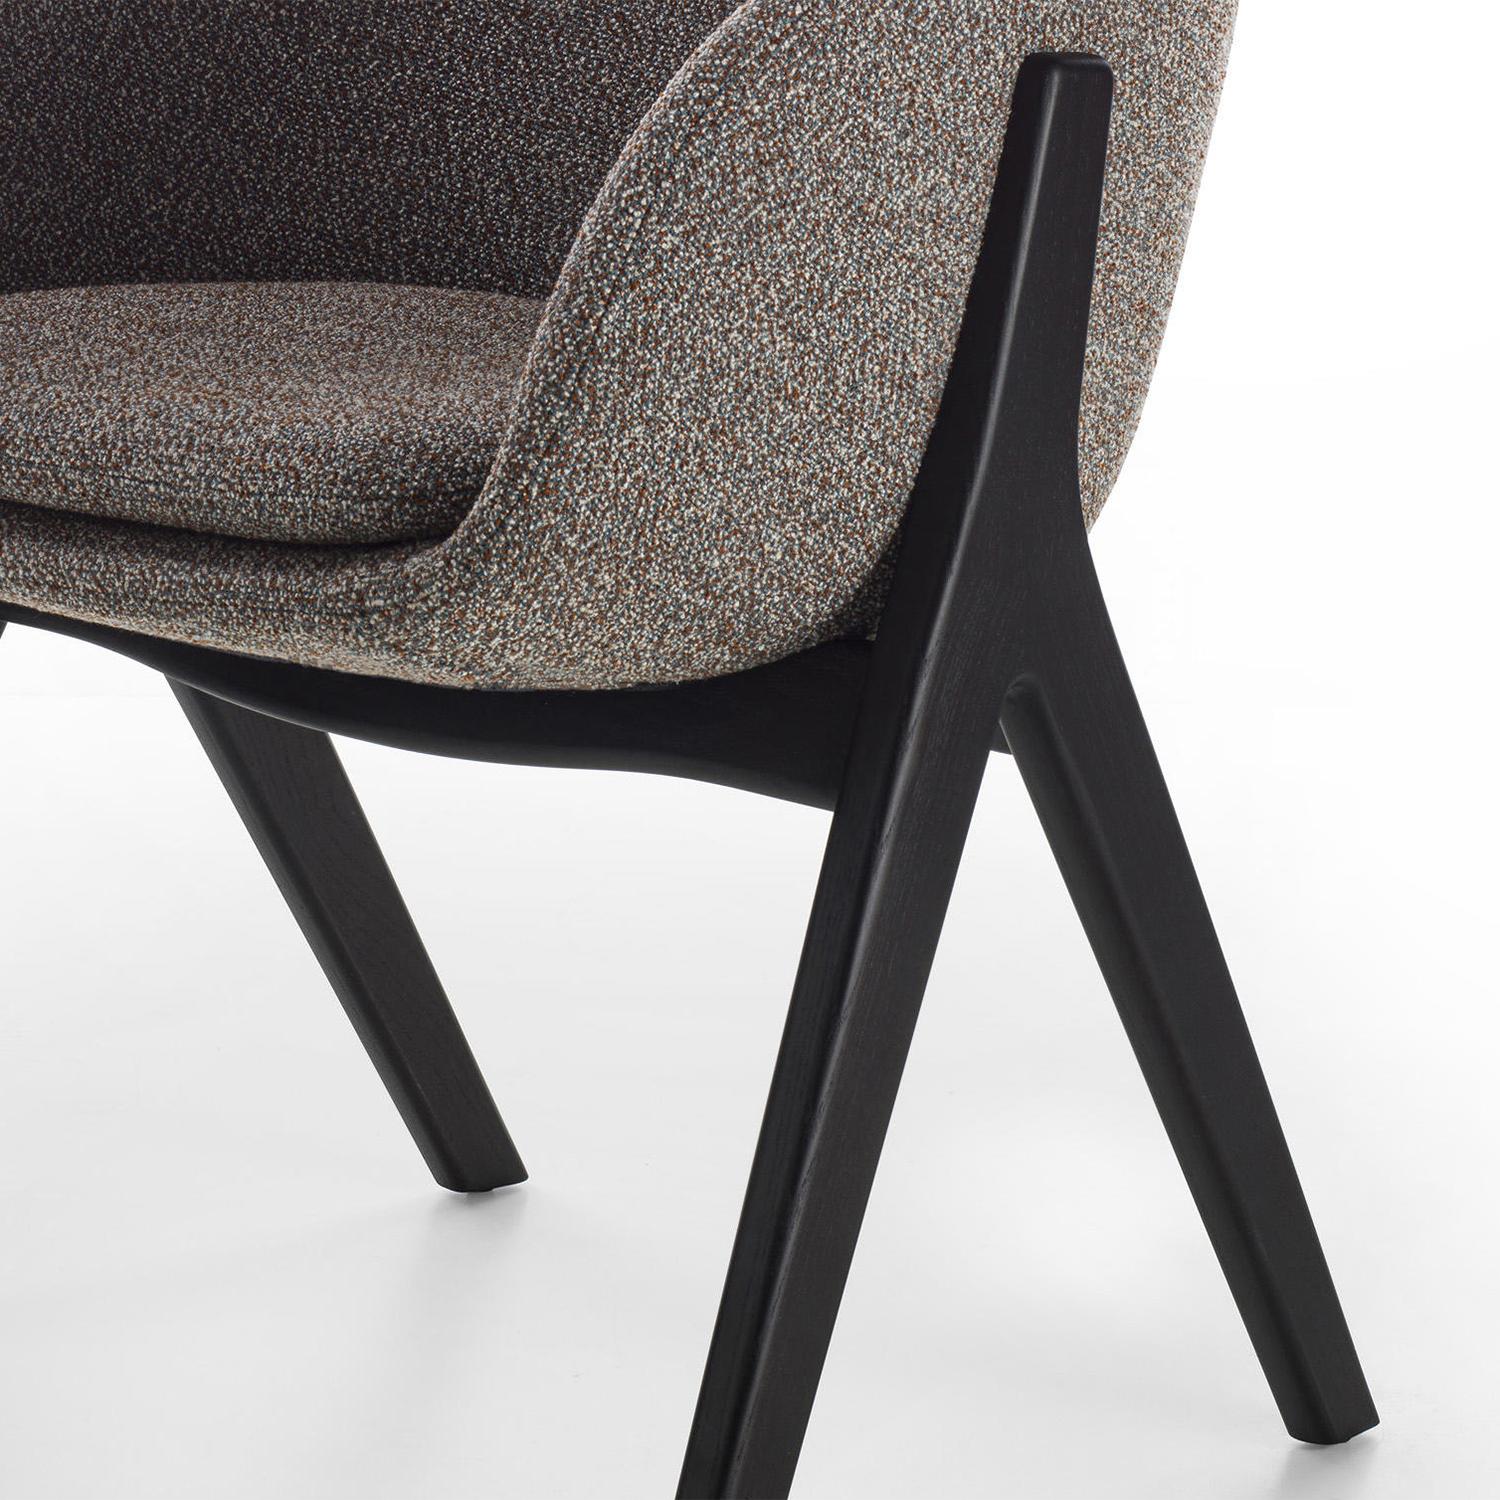 Fabric Oprah Ash Dark Chair For Sale